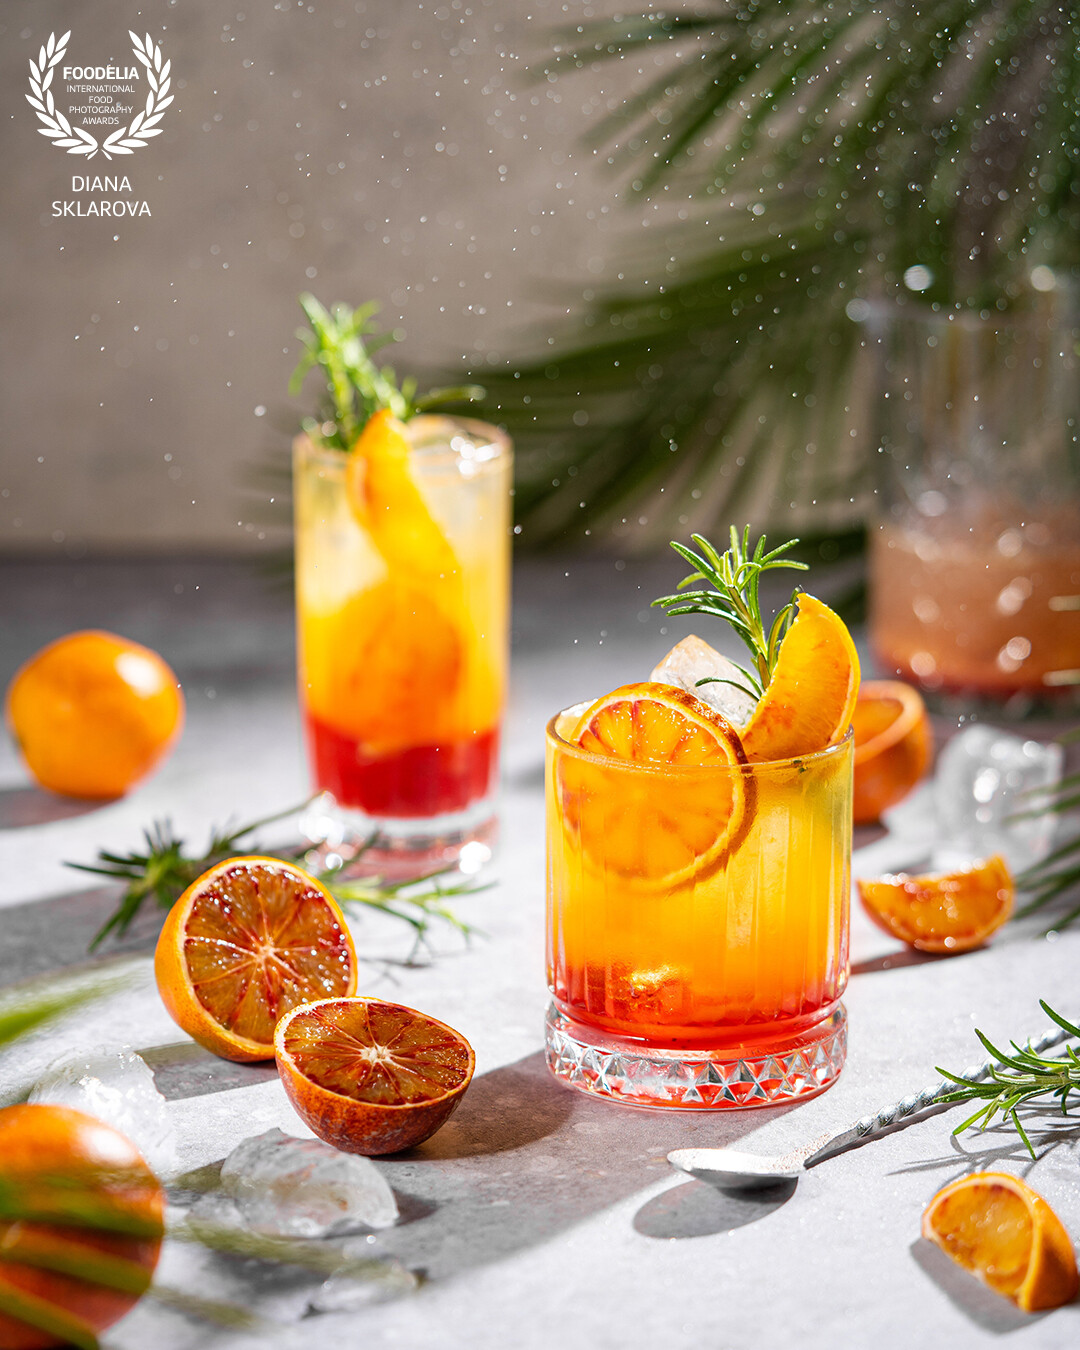 Red orange cocktail drink in sunny summer mood.